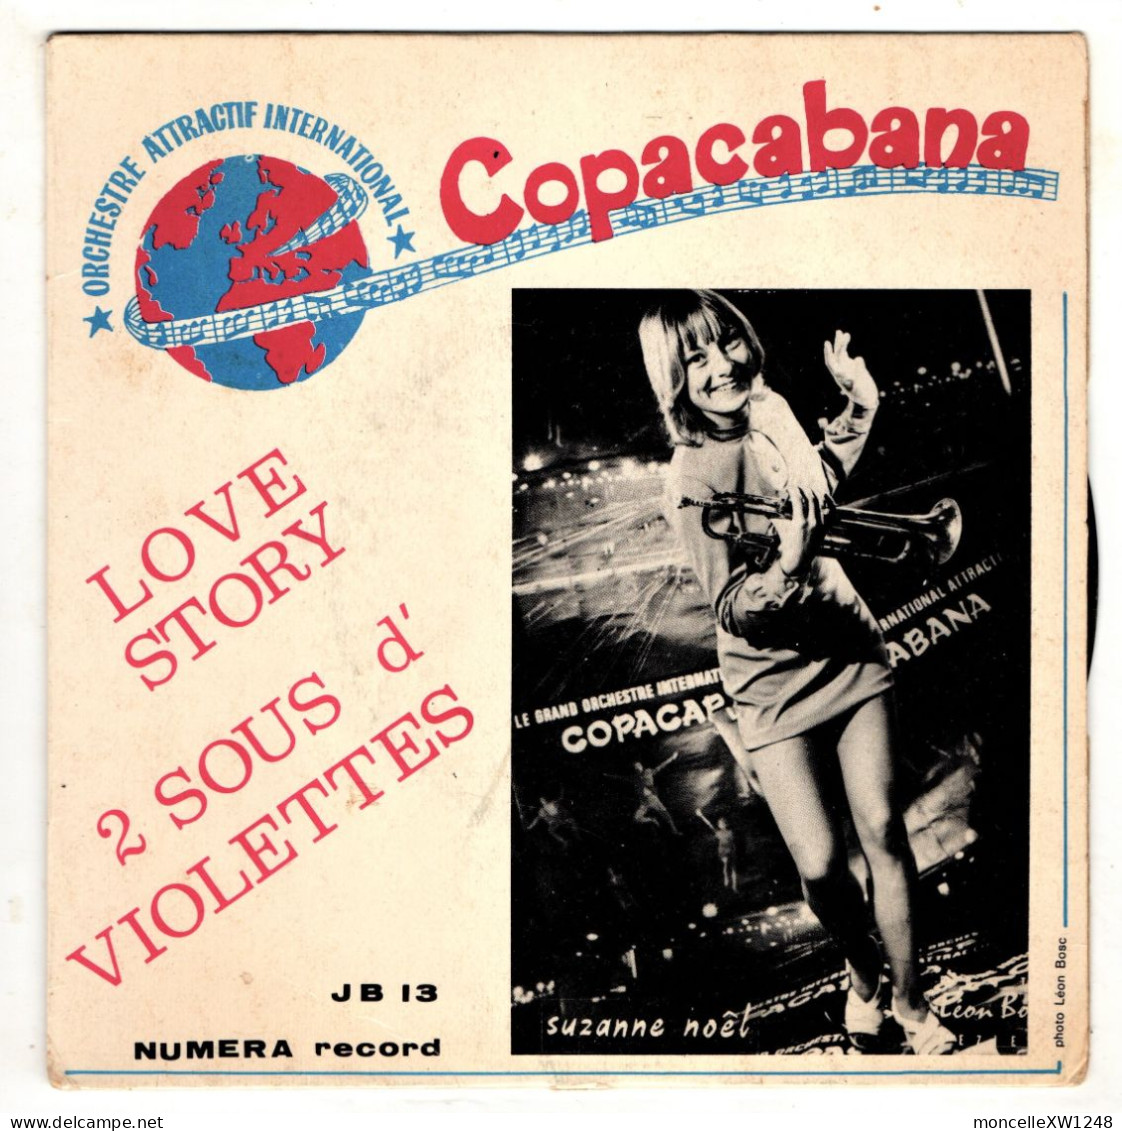 Copacabana - 45 T SP Love Story (1960) - Instrumental